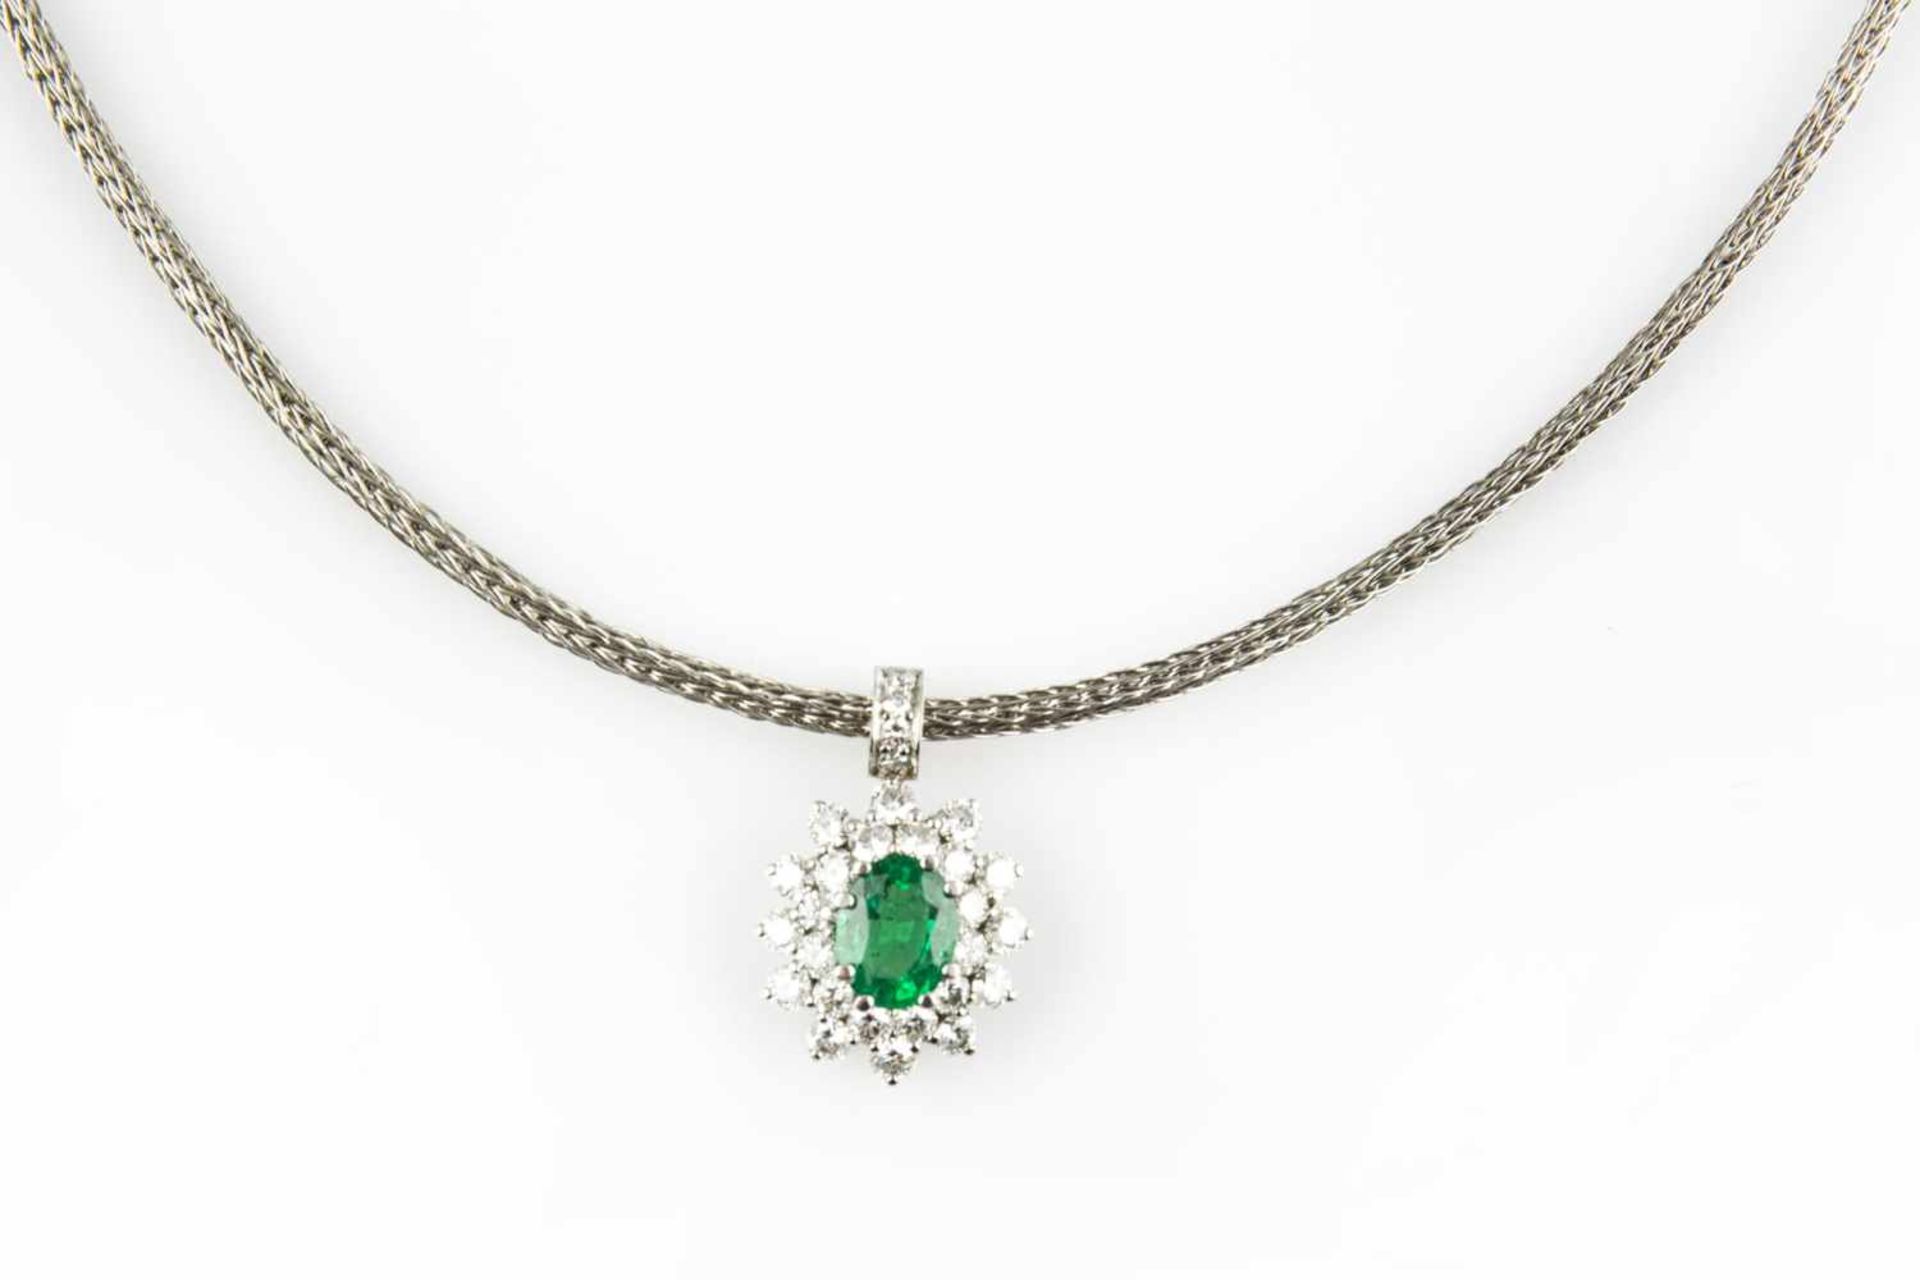 Necklace with emerald pendant - Bild 2 aus 4